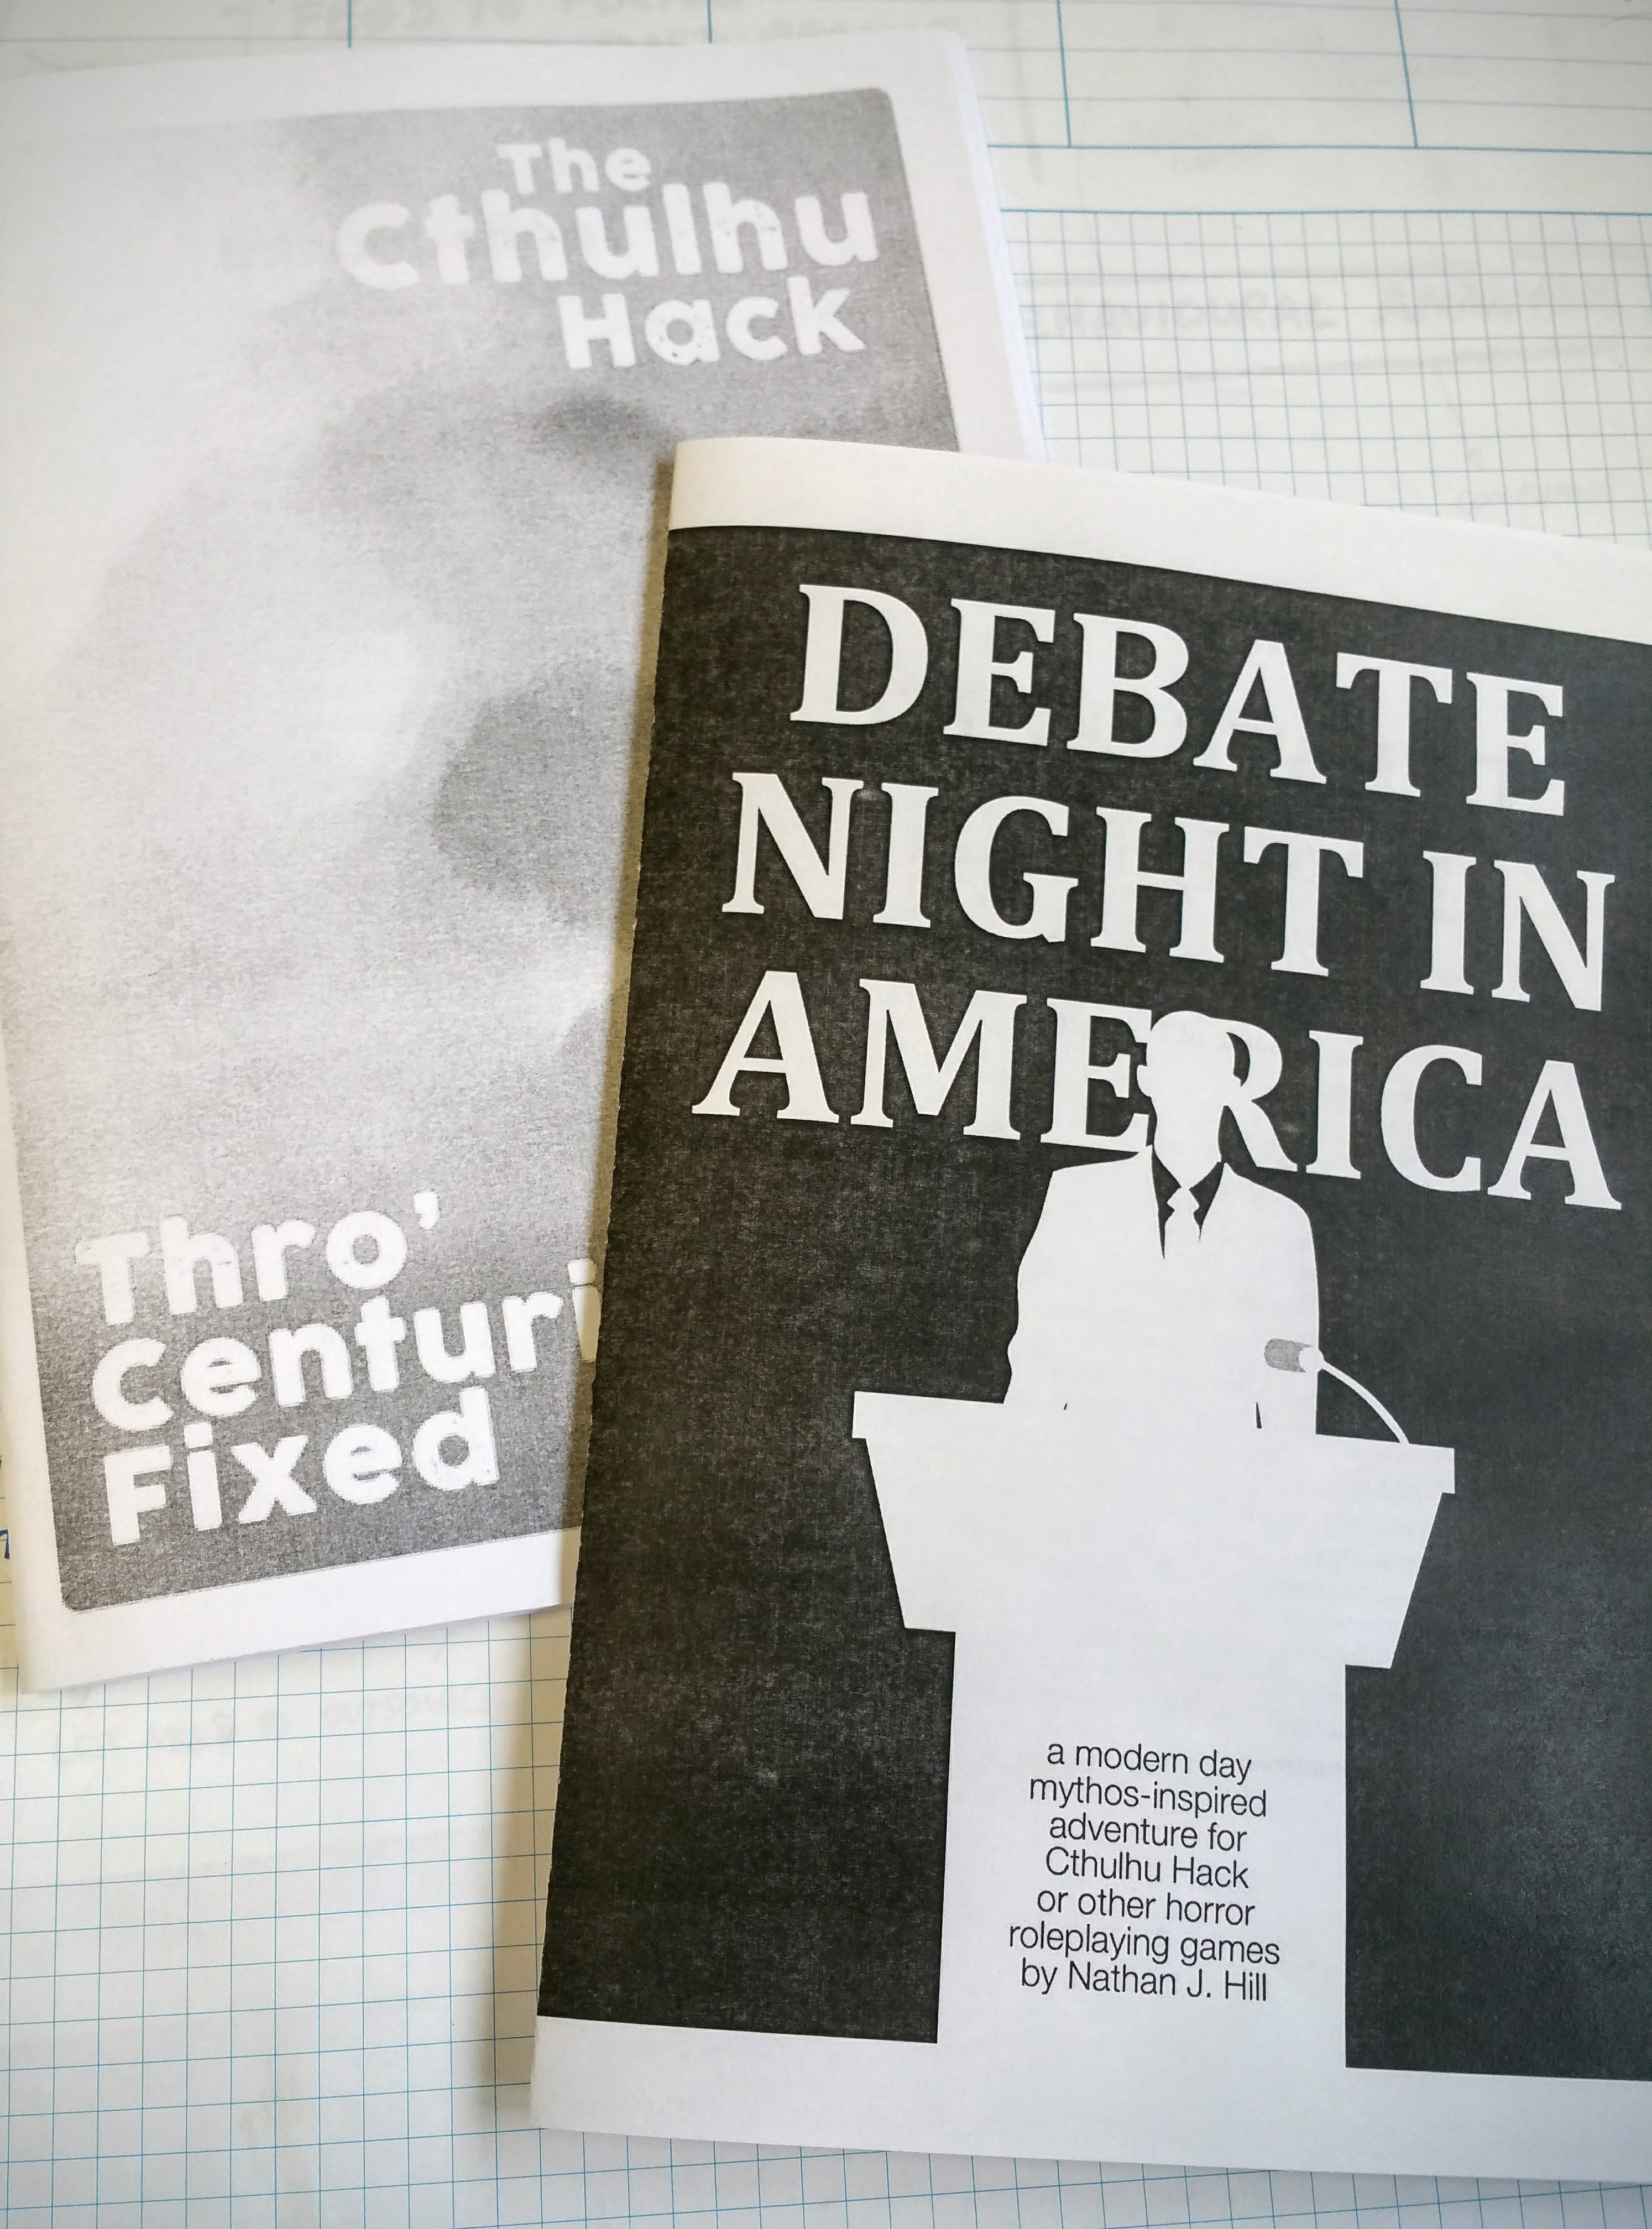 thro-centuries-fixed-debate-night-in-america